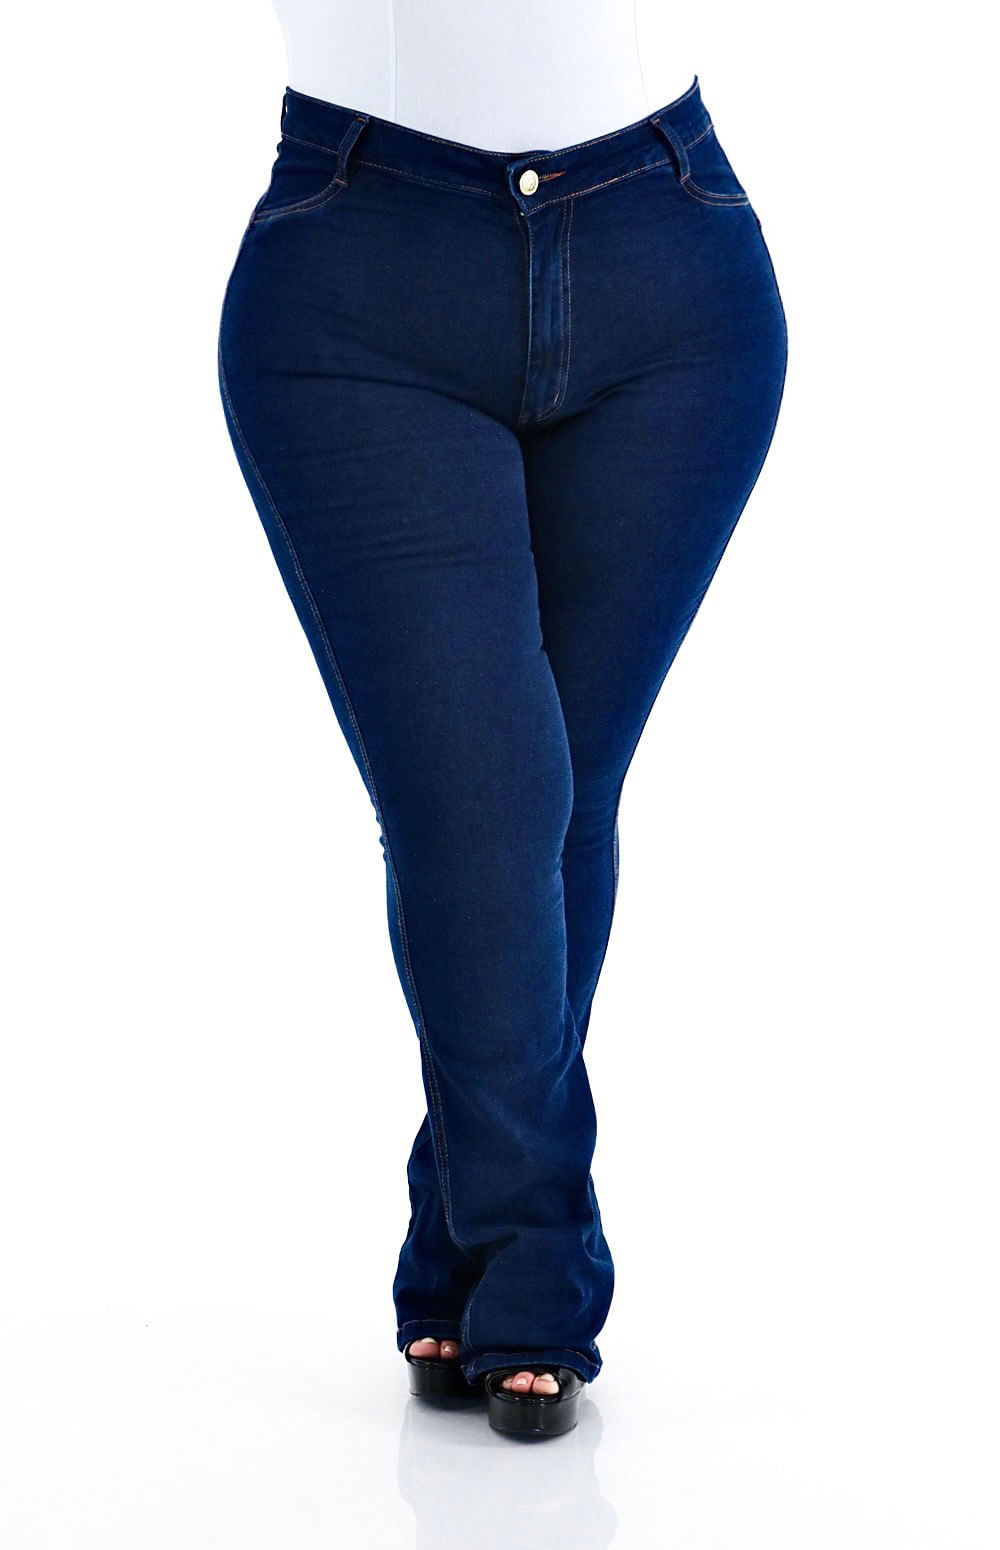 Calça Feminina Plus Size Preta  Divero Jeans - Roupa Feminina